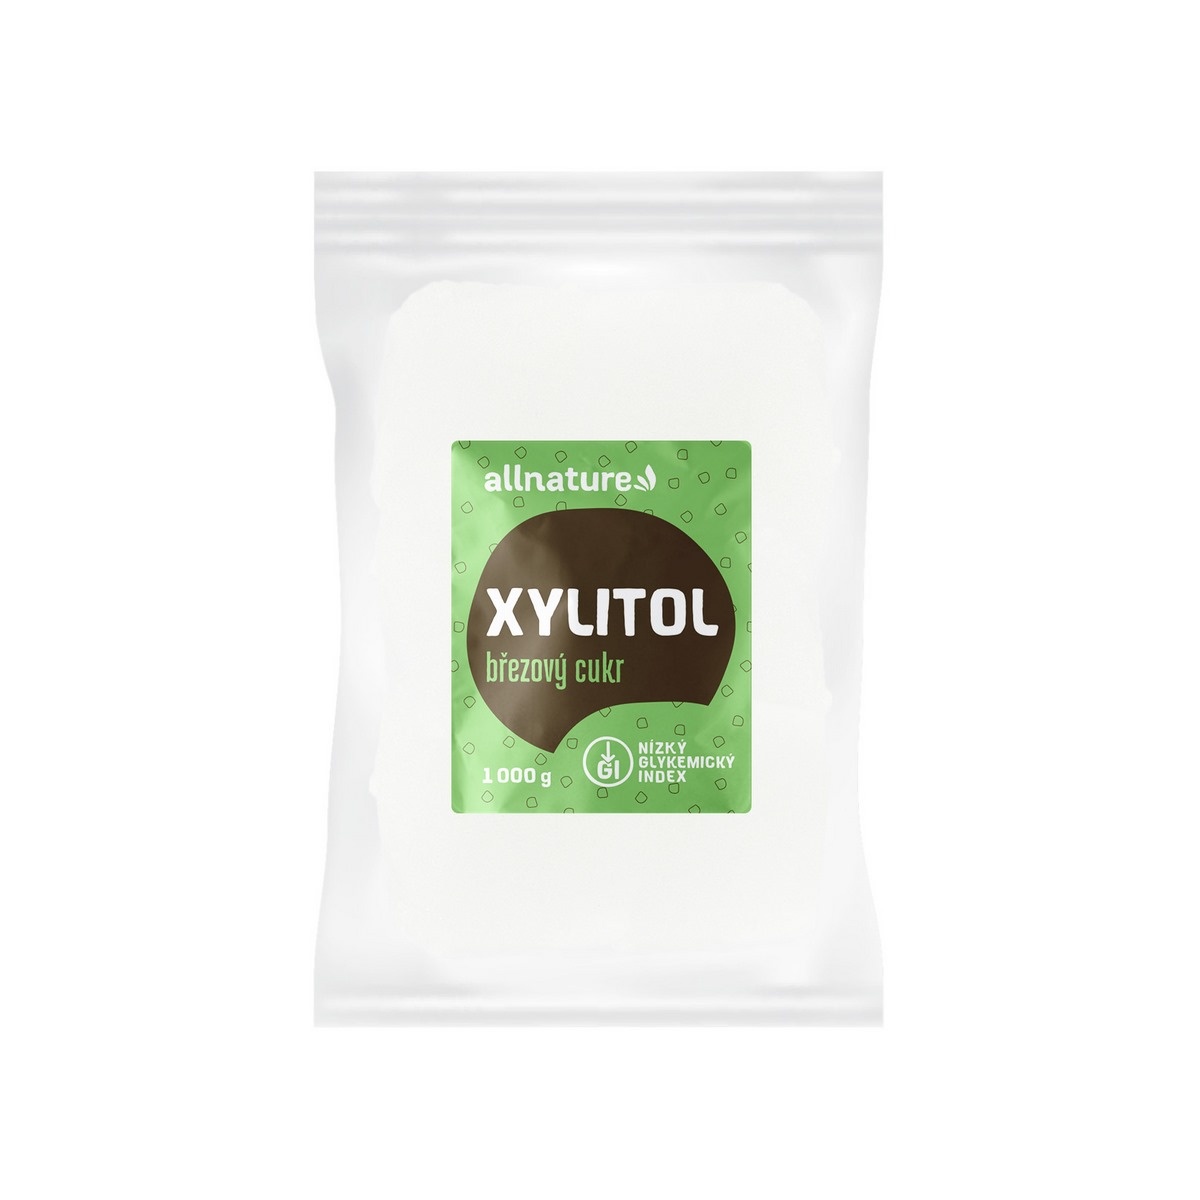 Allnature Xylitol - březový cukr 1000 g Allnature